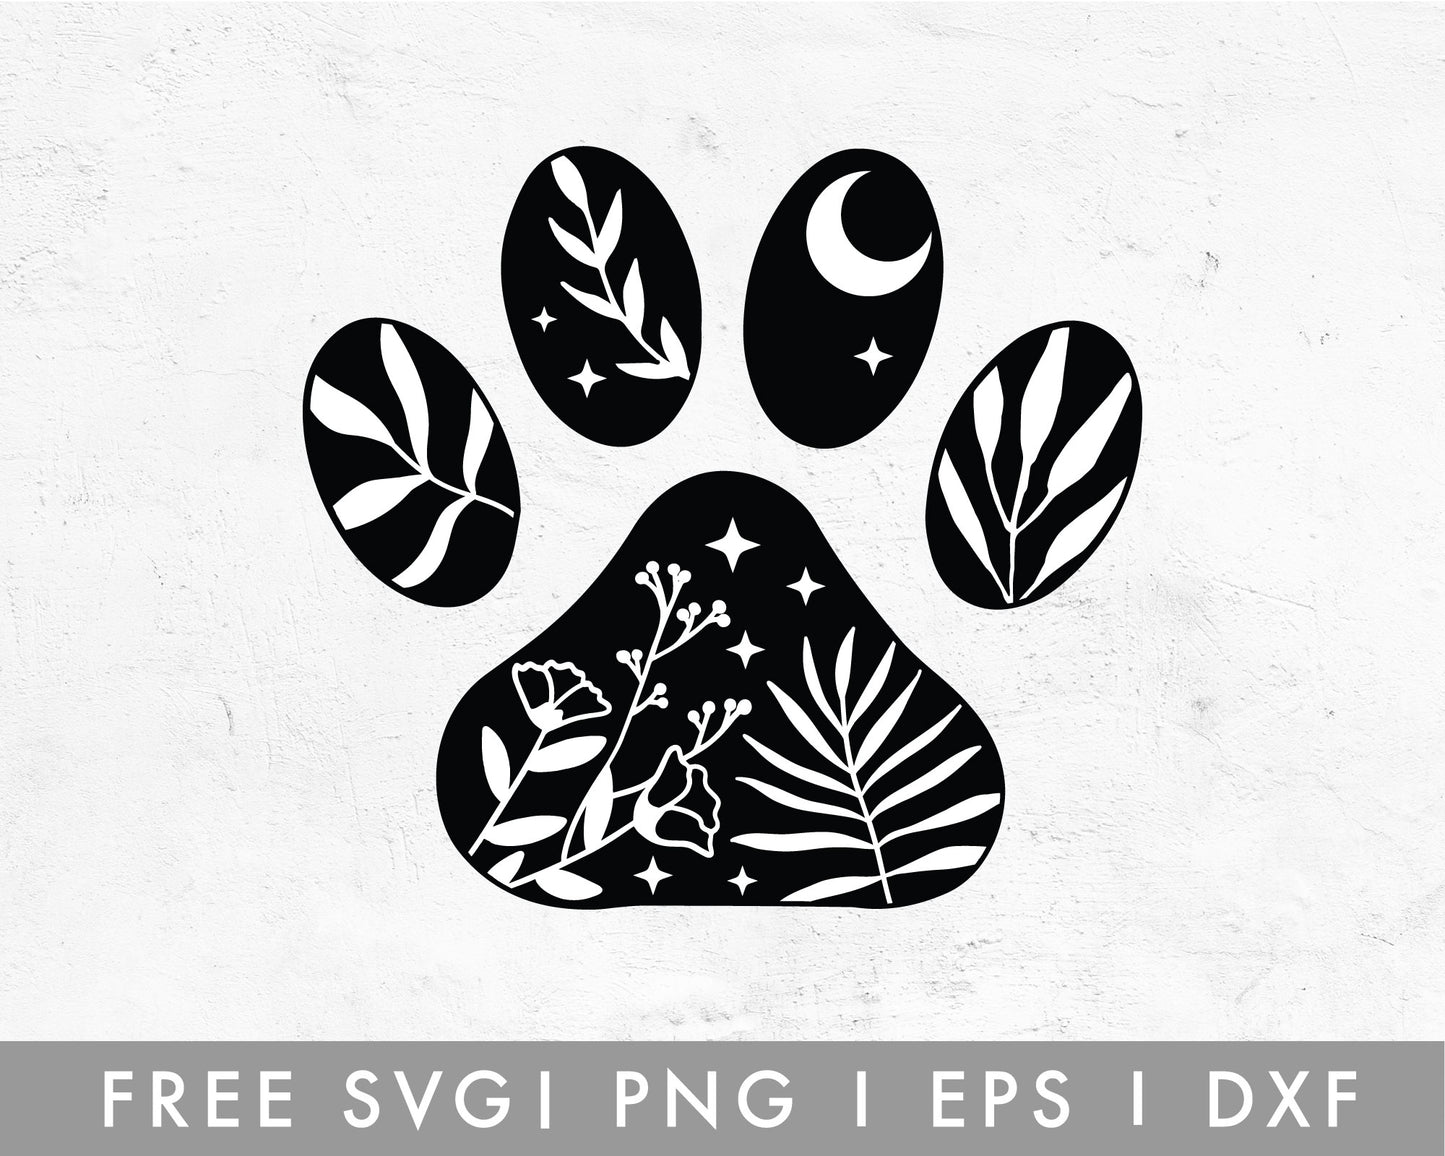 FREE Dog Mom SVG | Botanical Dog Paw SVG Cut File for Cricut, Cameo Silhouette | Free SVG Cut File